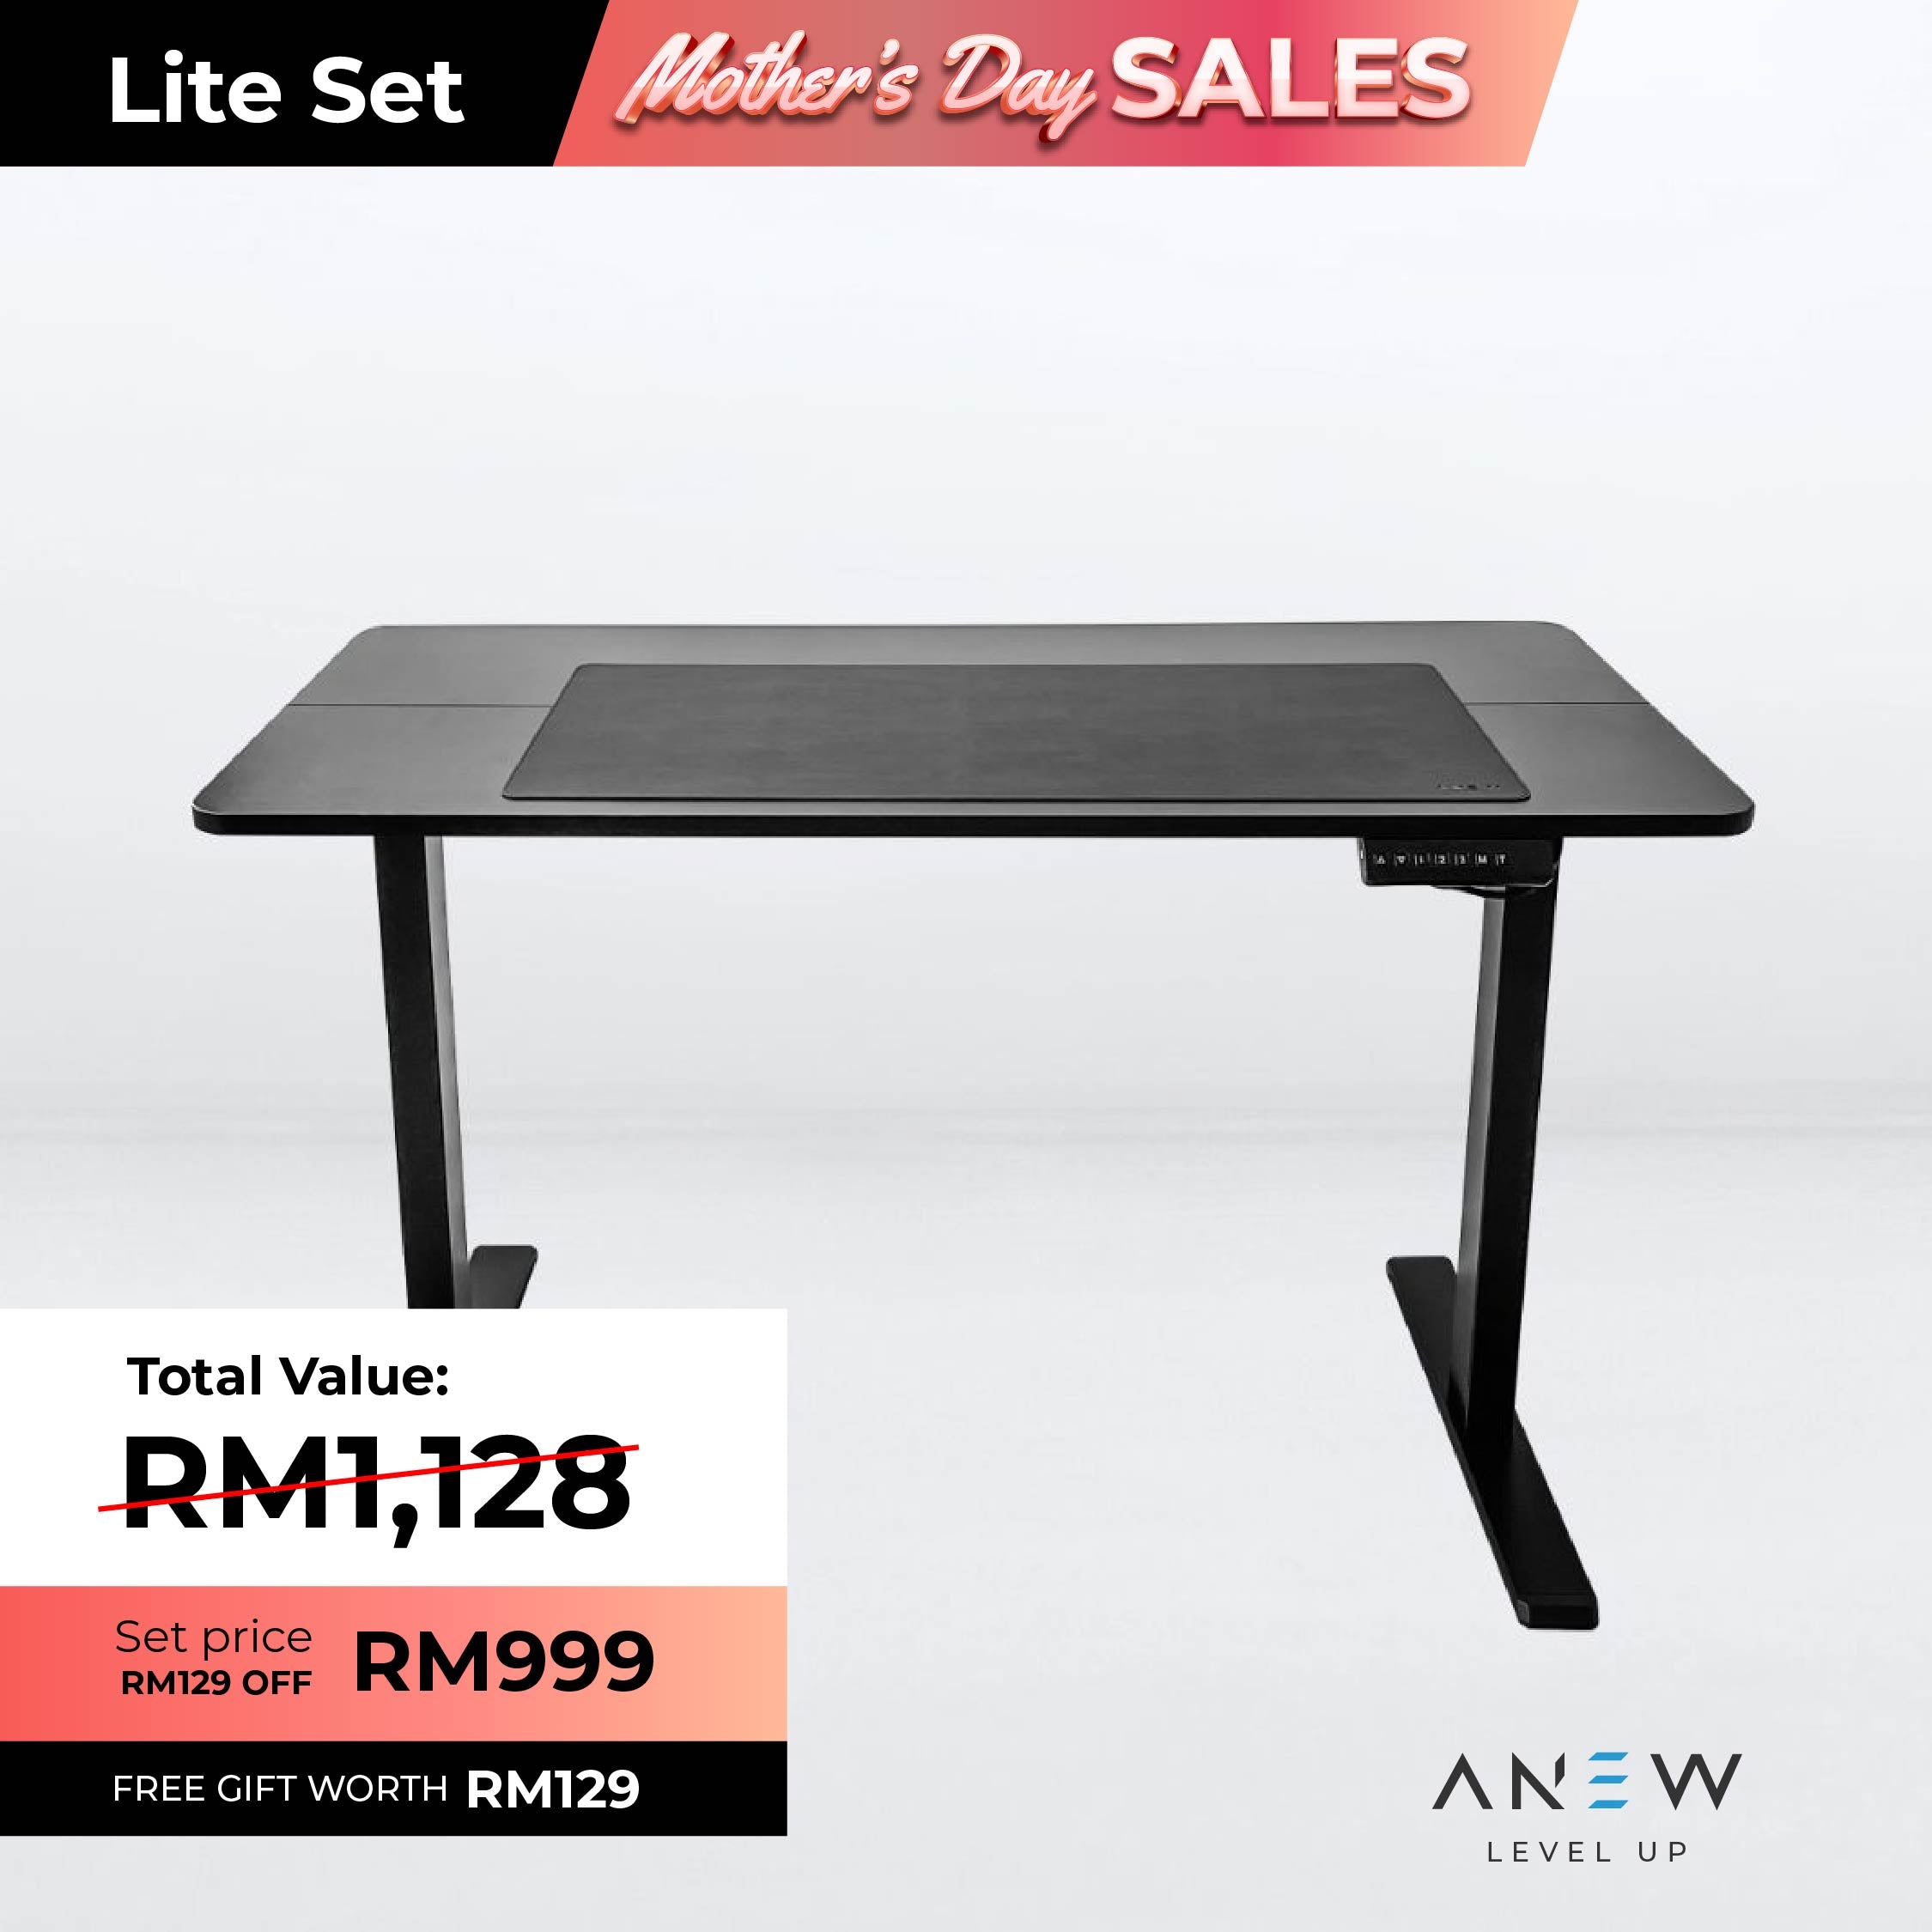 ANEW Standard Smart Desk - Lite Set c/w Free Gift worth RM129